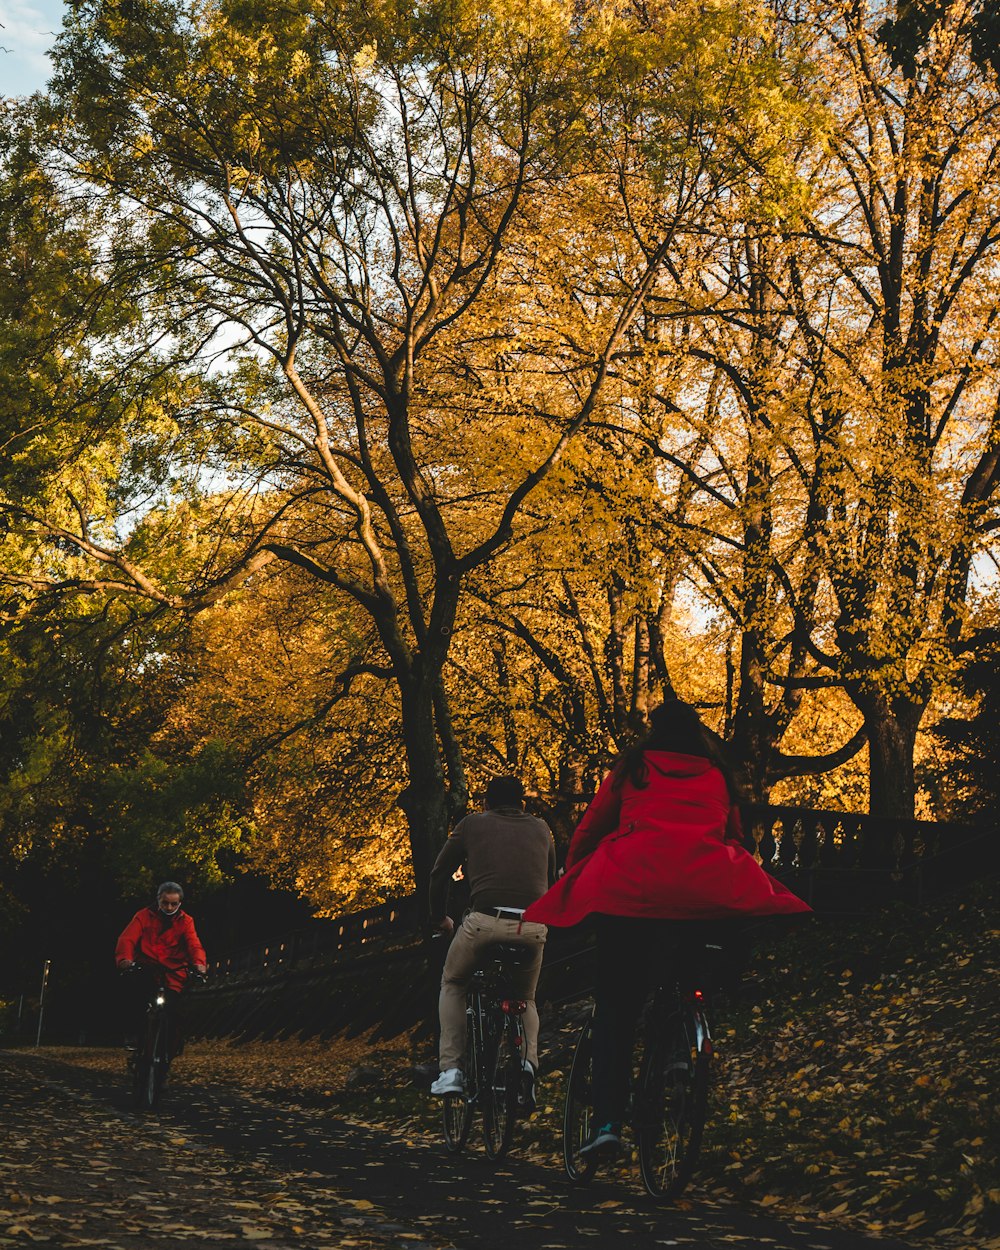 people walking on pathway between trees during daytime